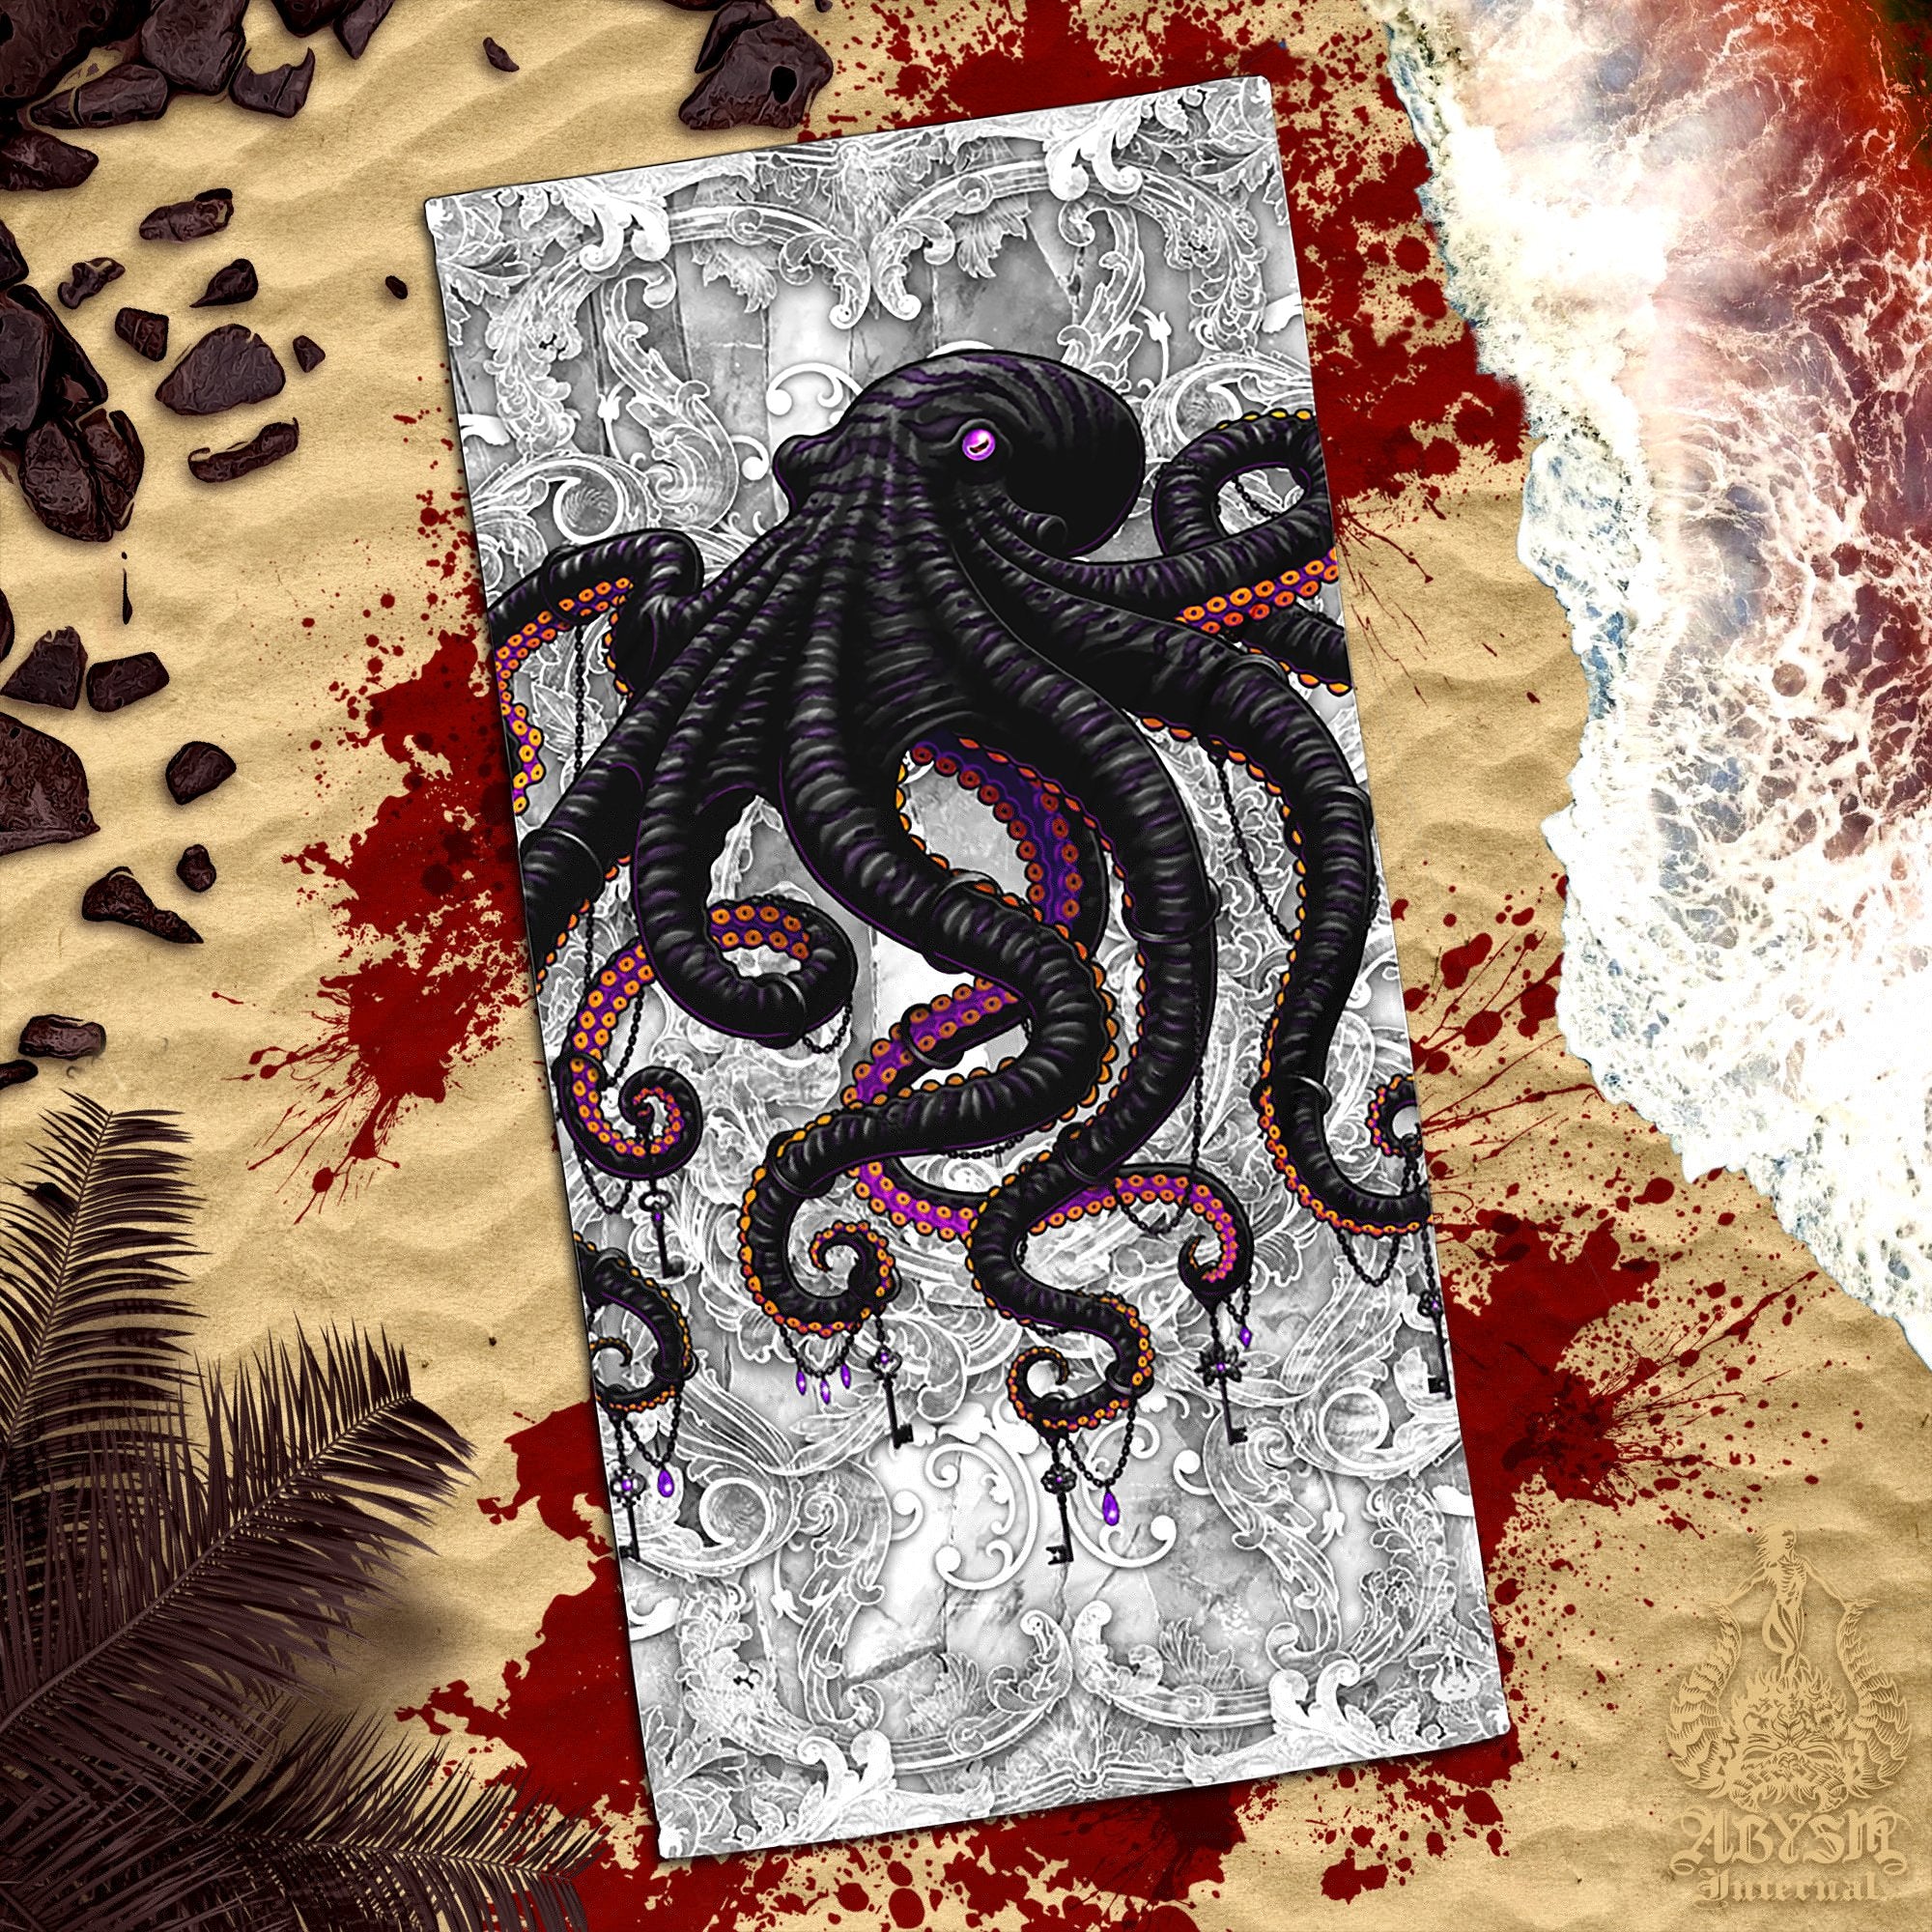 ALL Octopus Beach Towel Designs - 16 Colors - Abysm Internal